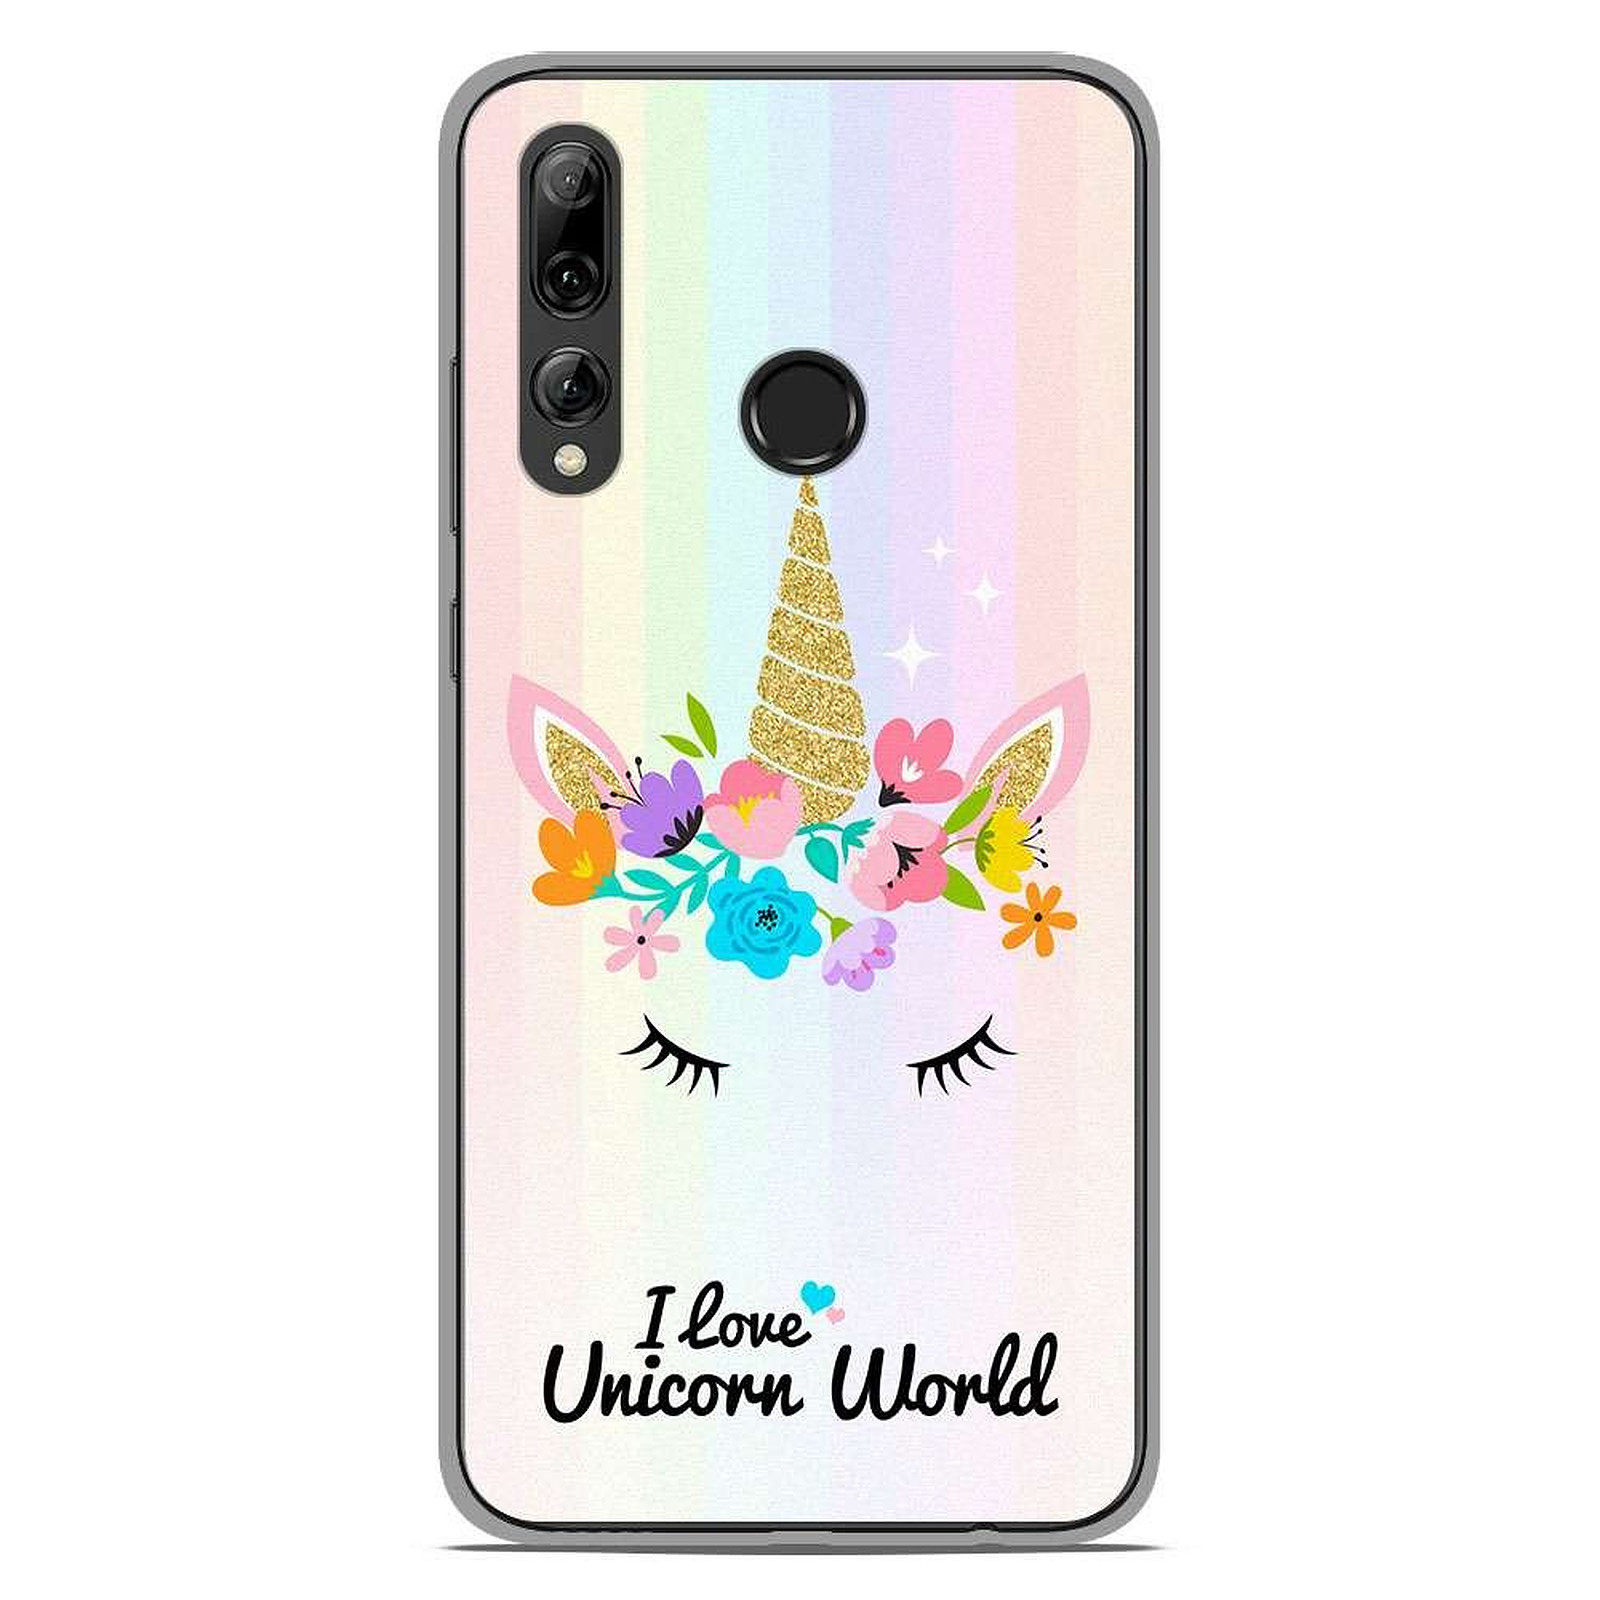 1001 Coques Coque silicone gel Huawei P Smart Plus 2019 motif Unicorn World - Coque telephone 1001Coques